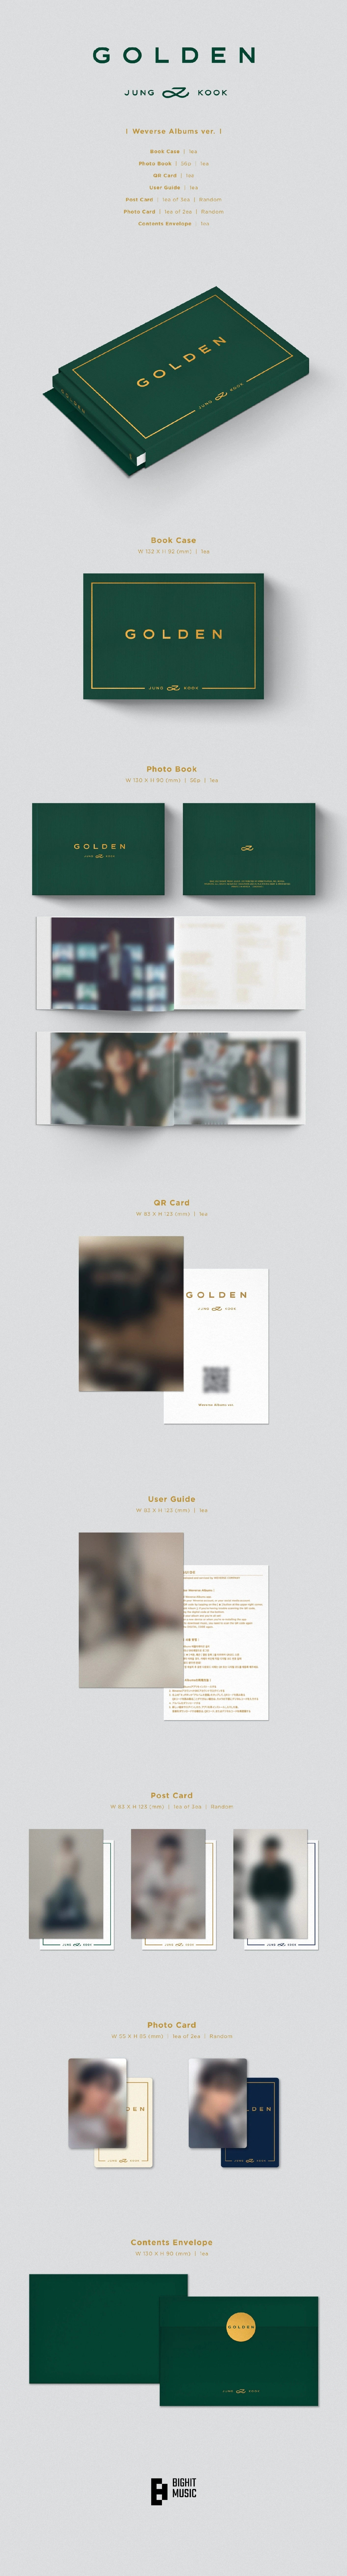 Jungkook - GOLDEN (Weverse Albums Ver.)